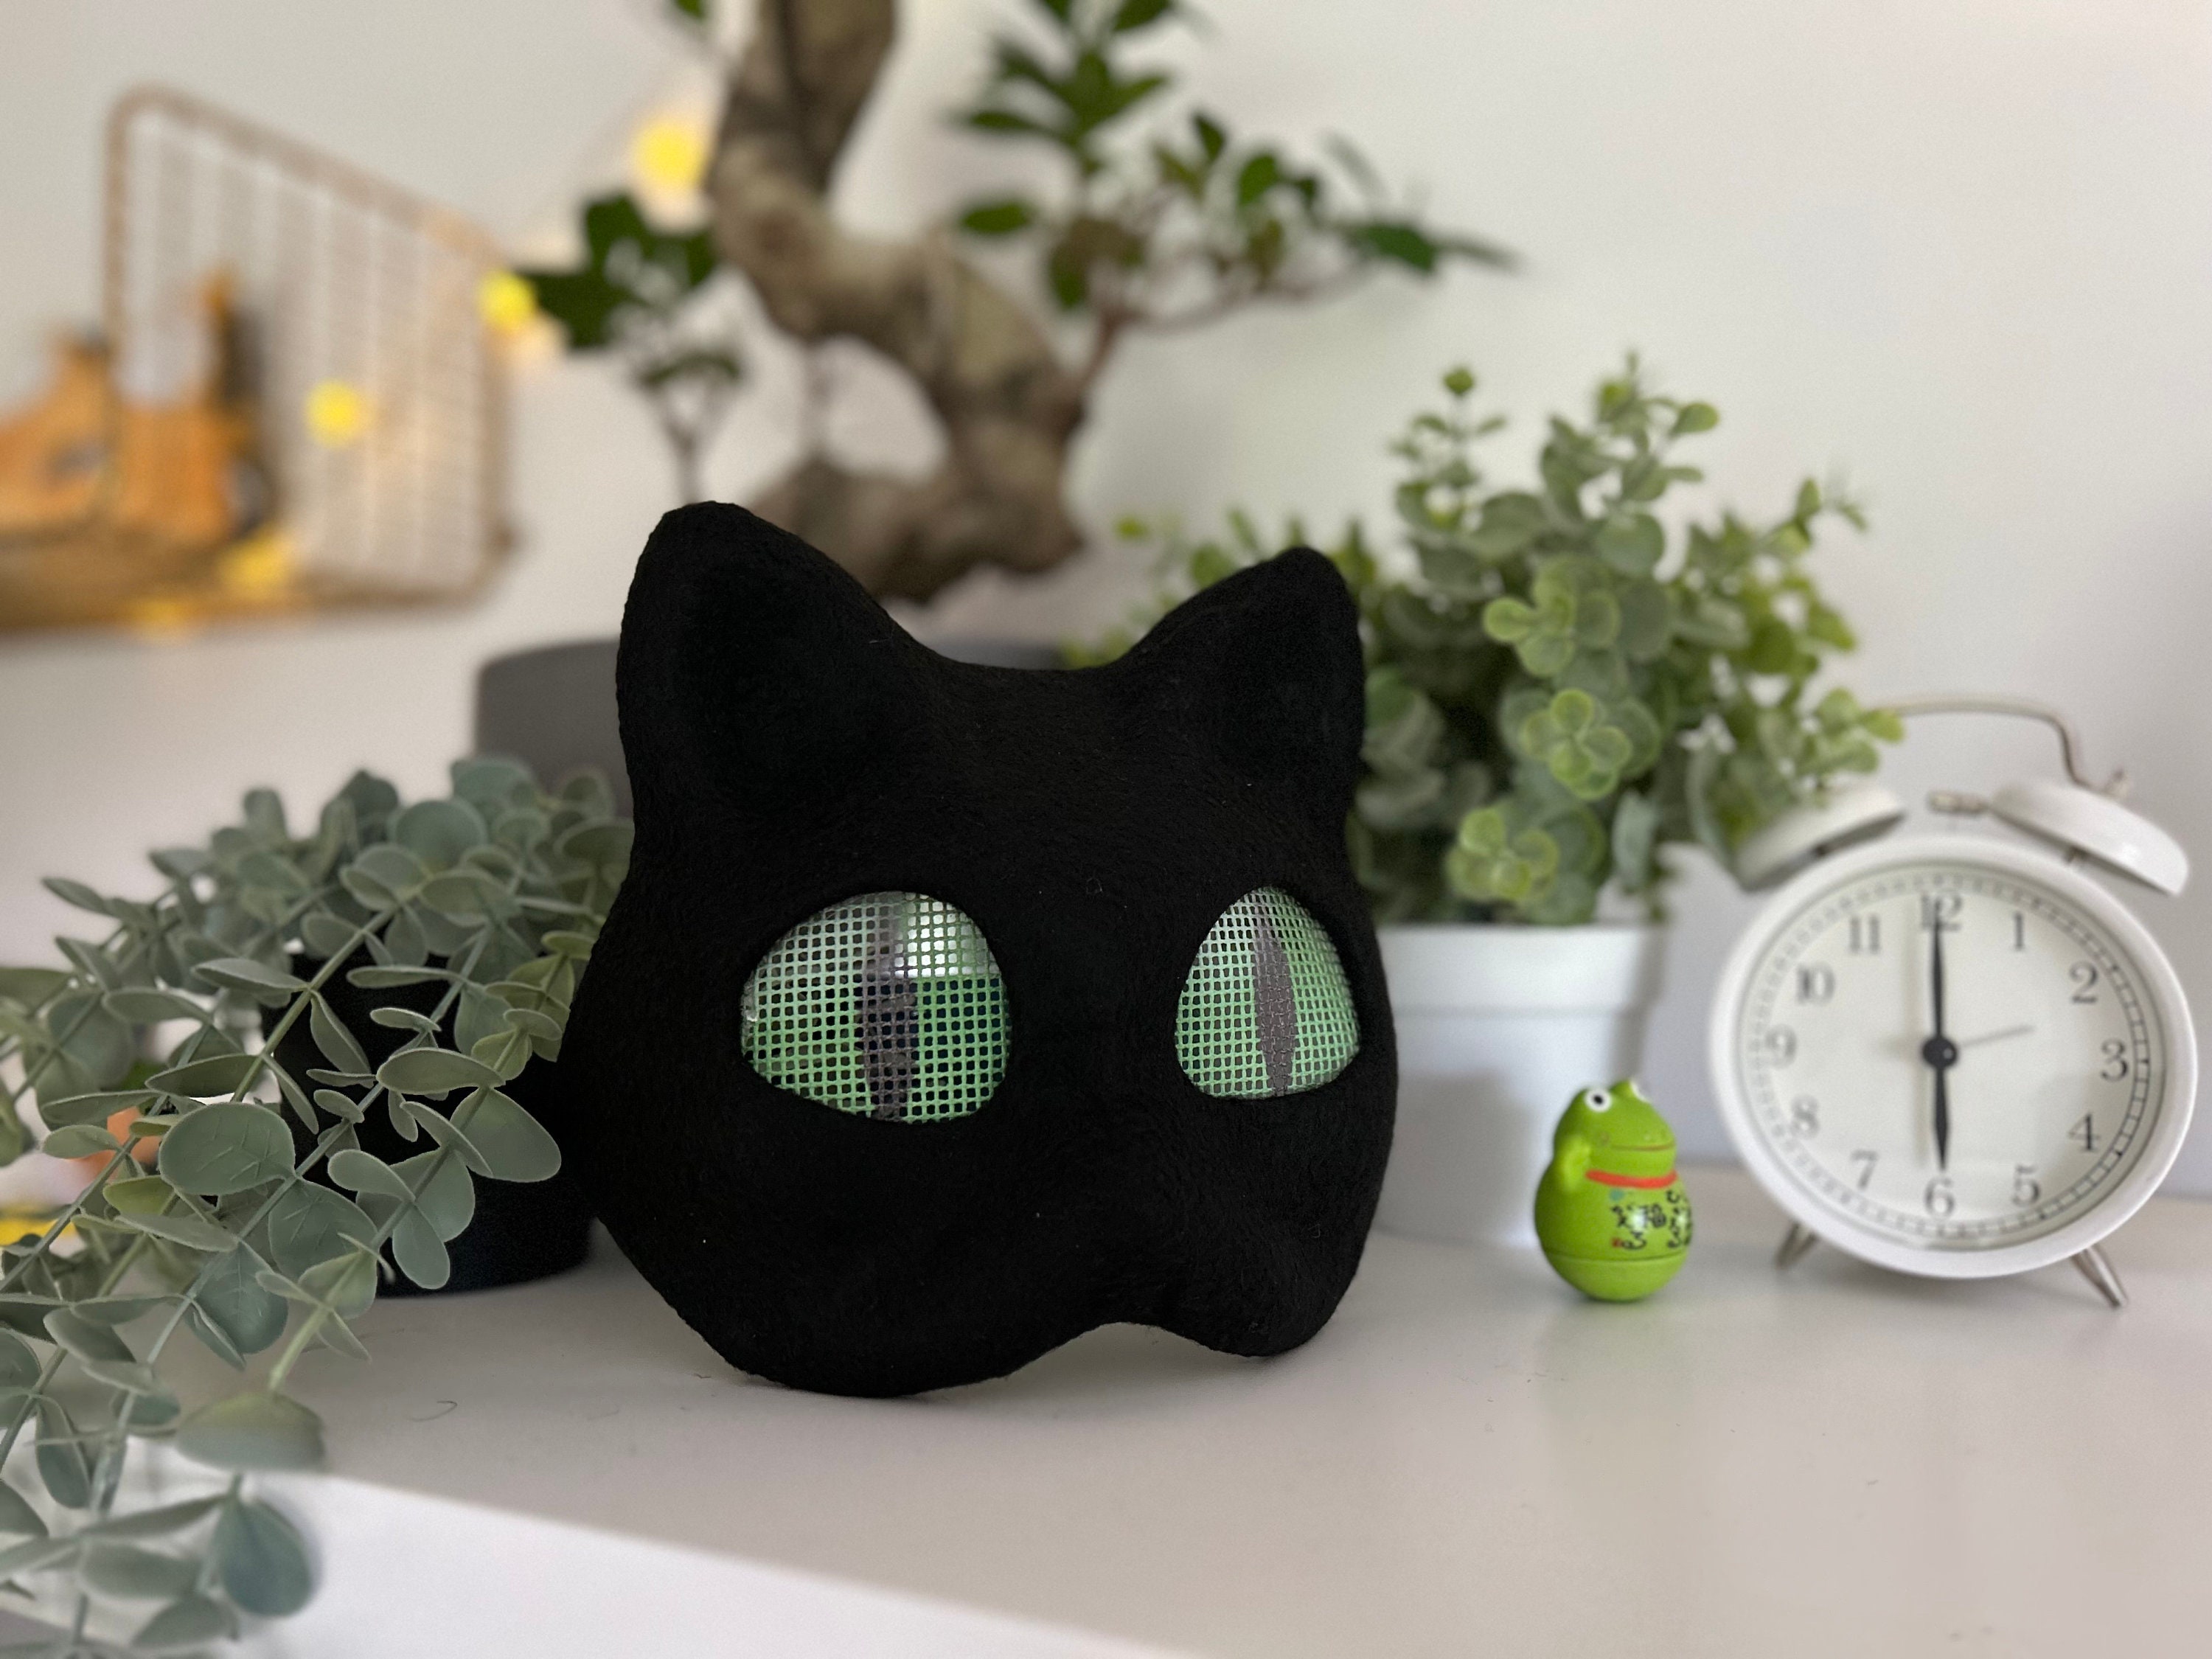 Custom Cat/Therian Mask